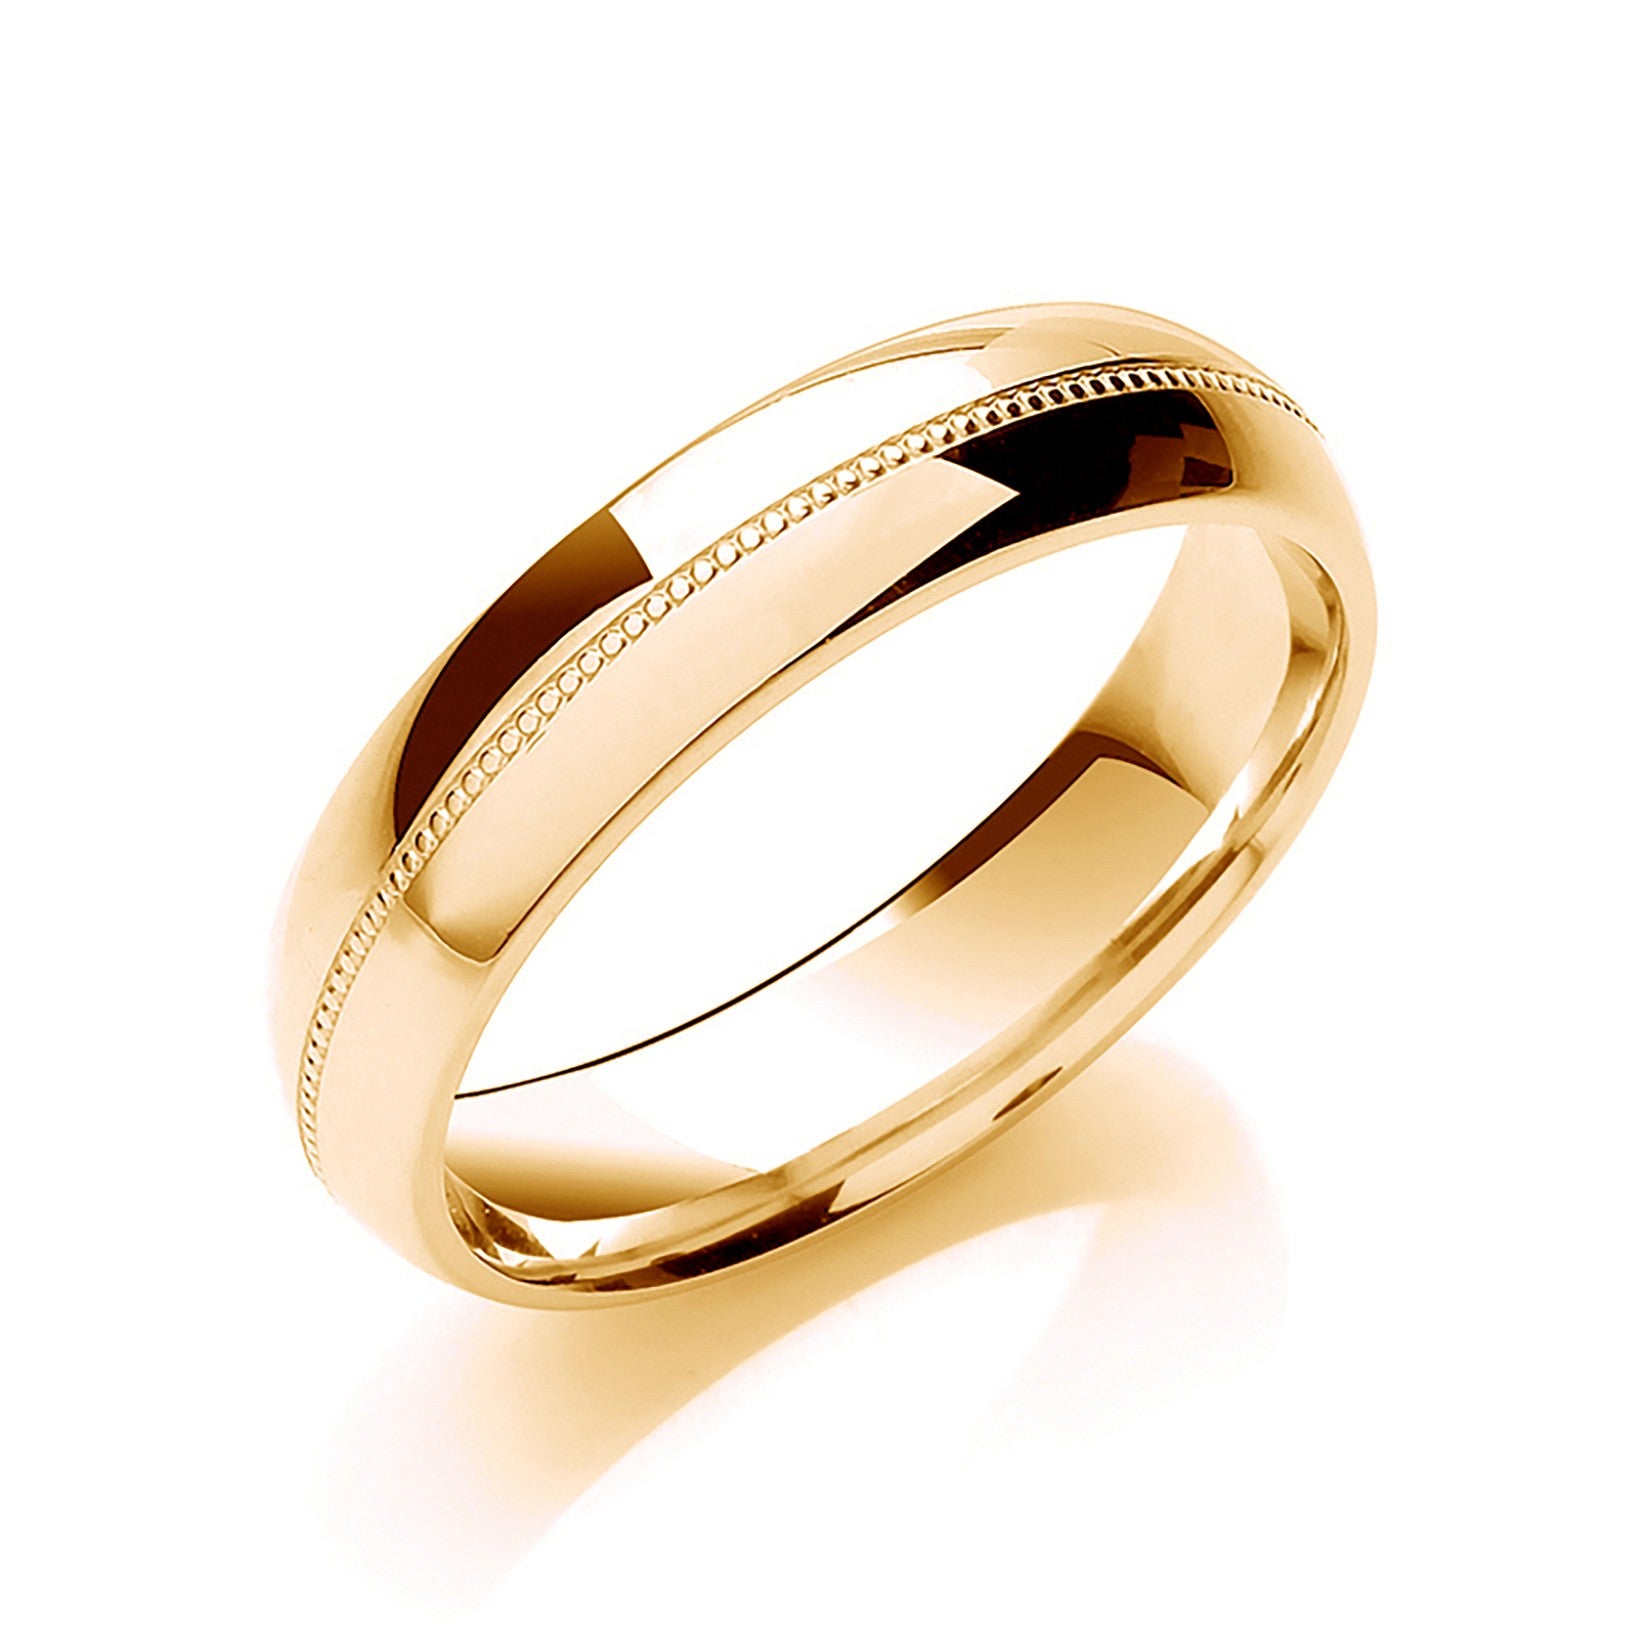 5mm 9CT Gold Milgrain Wedding Band - Robert Anthony Jewellers, Edinburgh